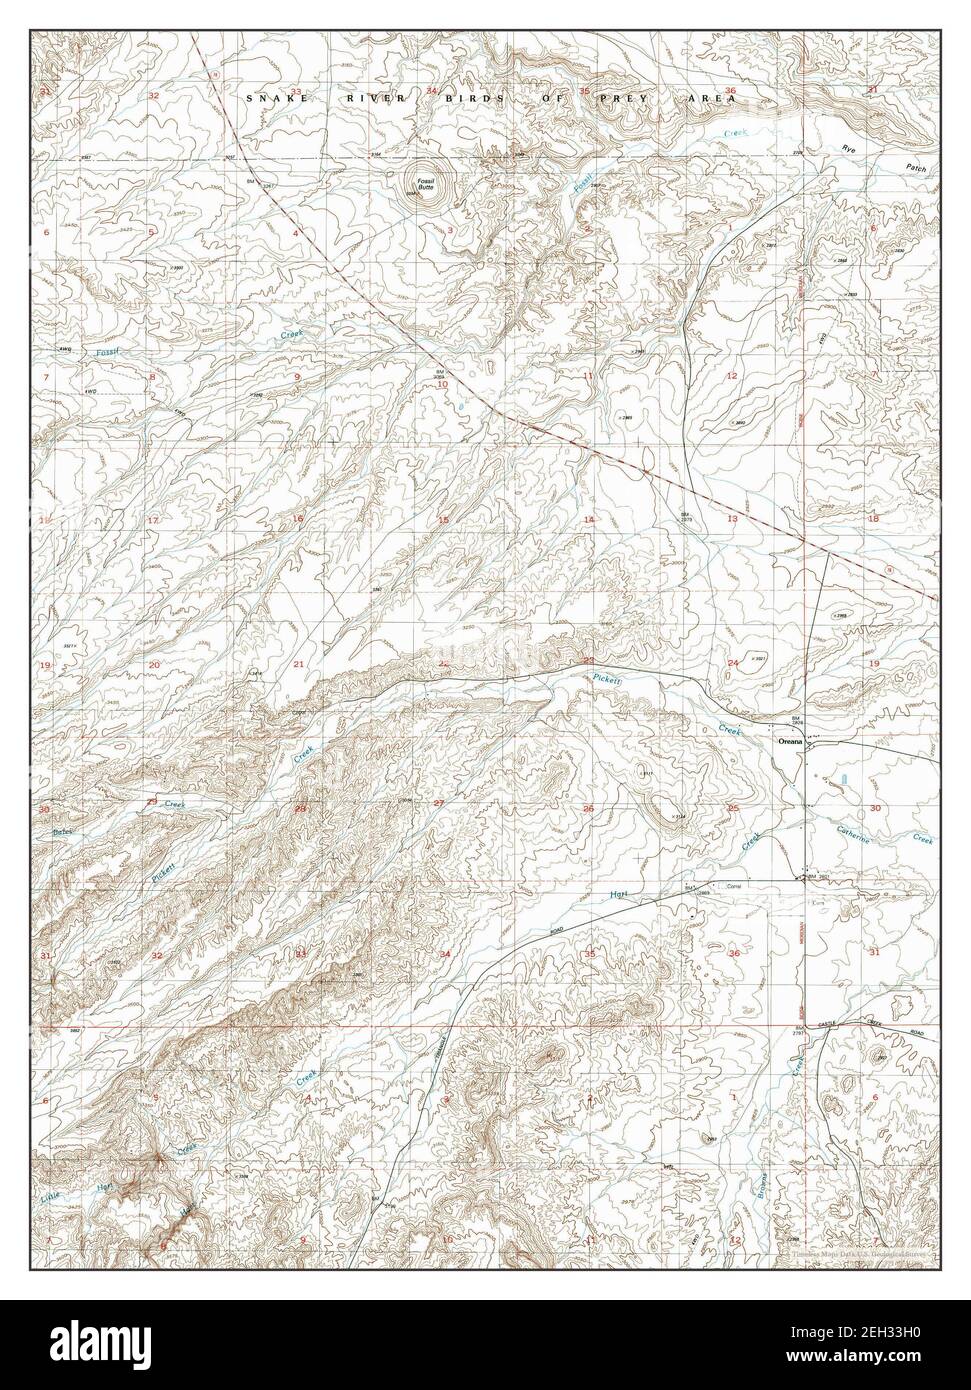 Oreana, Idaho, map 1992, 1:24000, United States of America by Timeless Maps, data U.S. Geological Survey Stock Photo